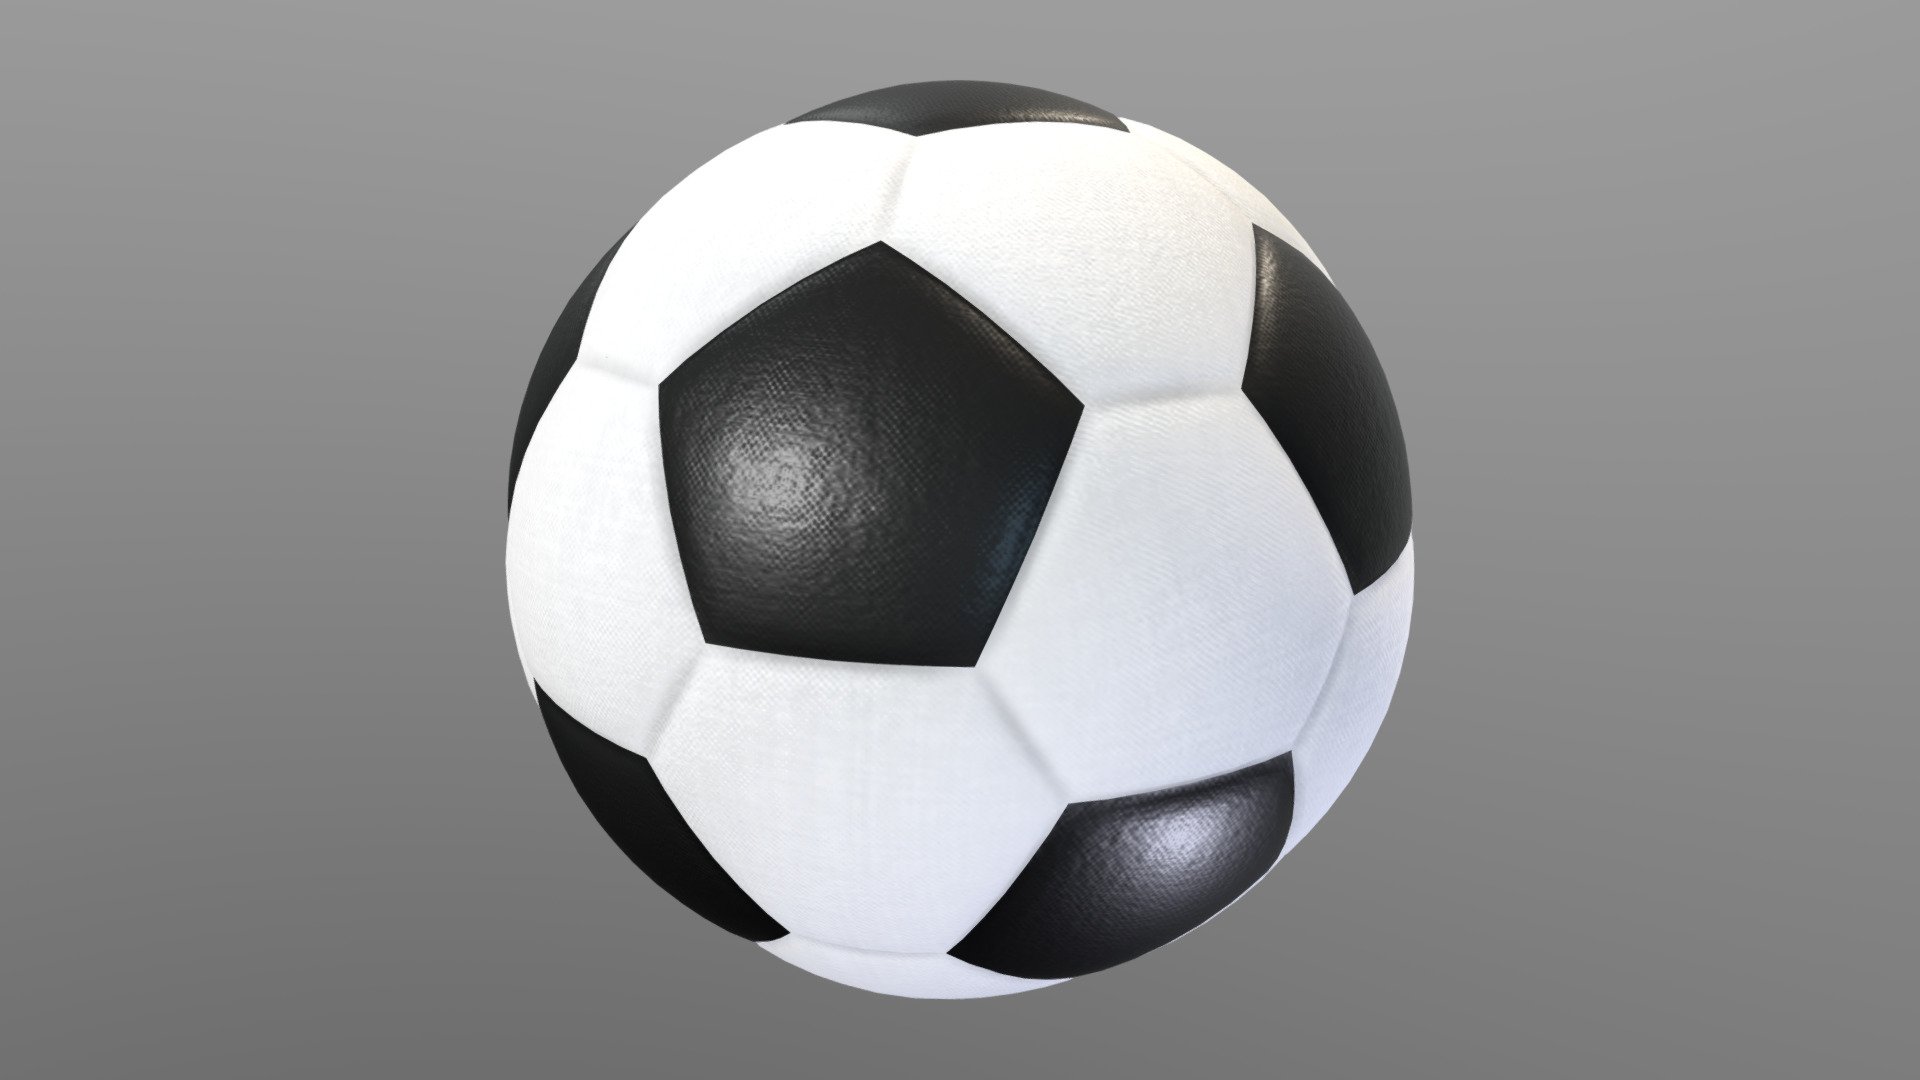 Soccer ball made following a CG cookie tutorial 3d model